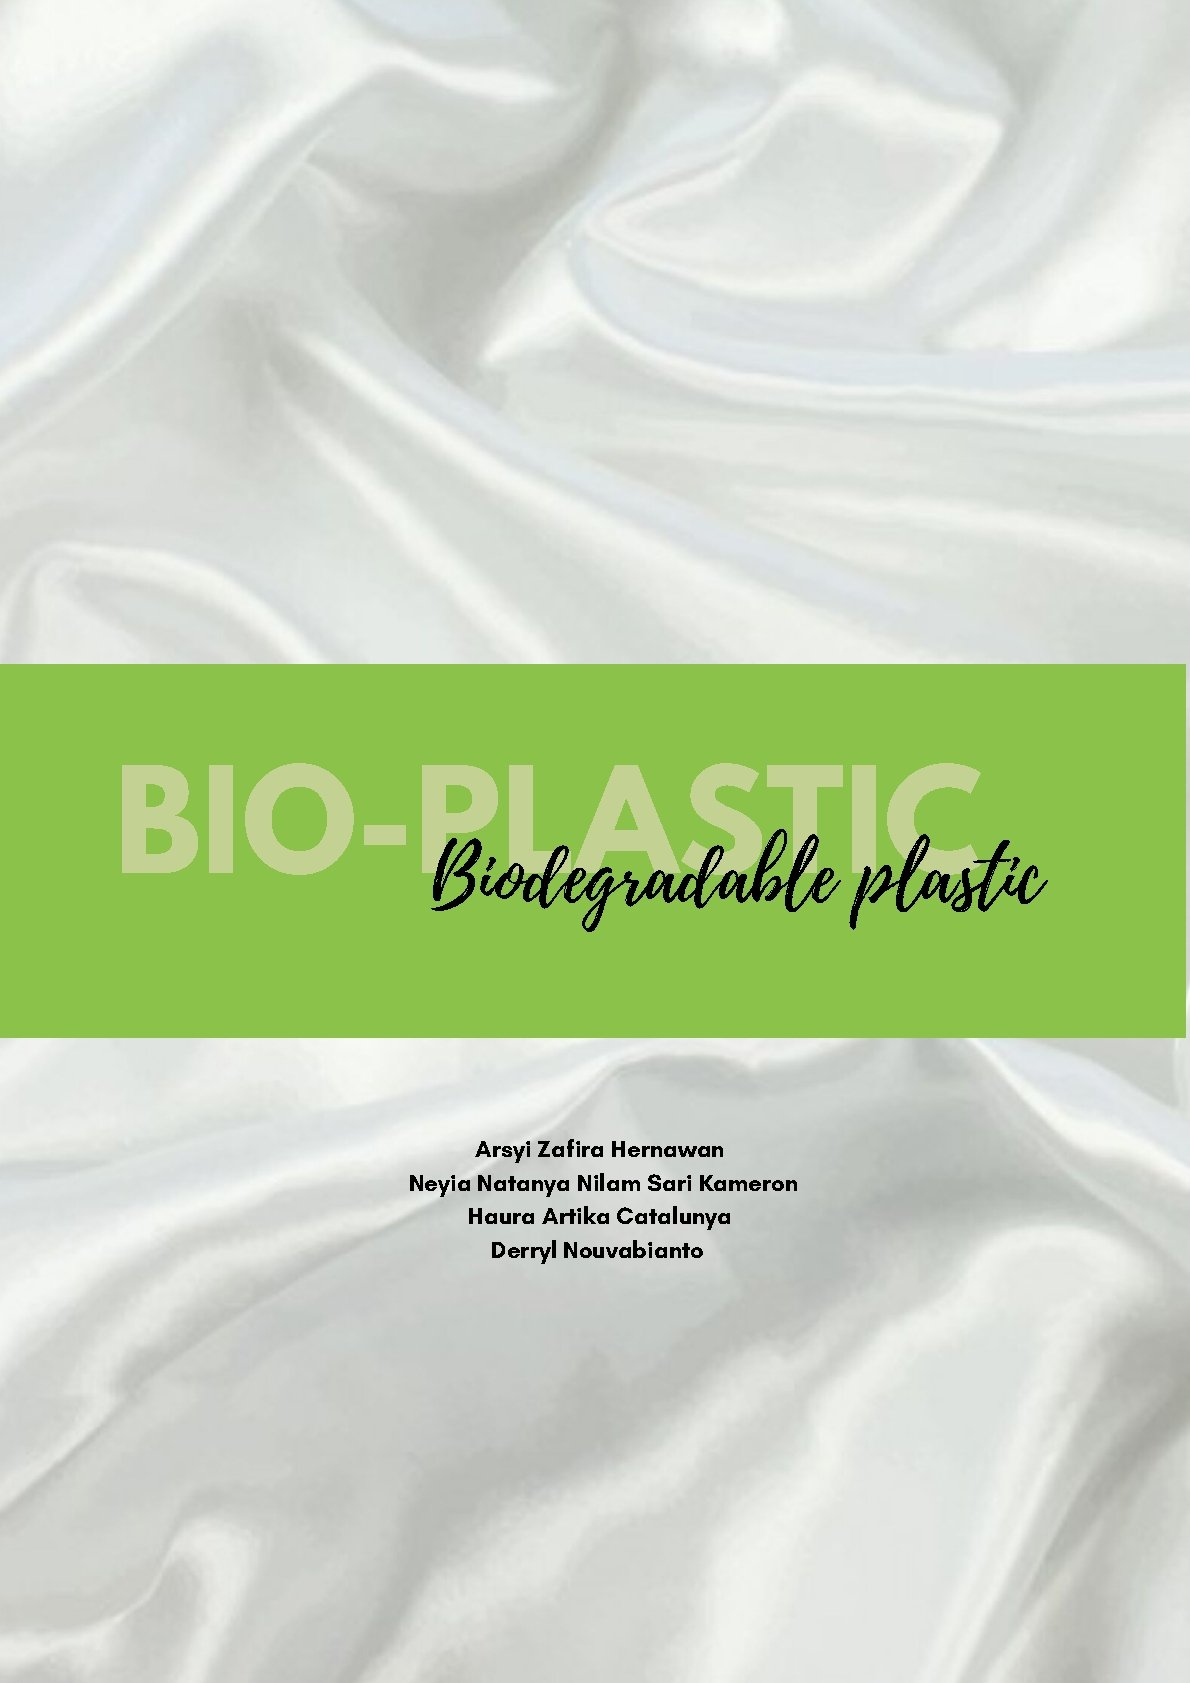 BIO-PLASTIC Biodegradable plastic Arsyi Zafira Hernawan Neyia Natanya Nilam Sari Kameron Haura Artika Catalunya